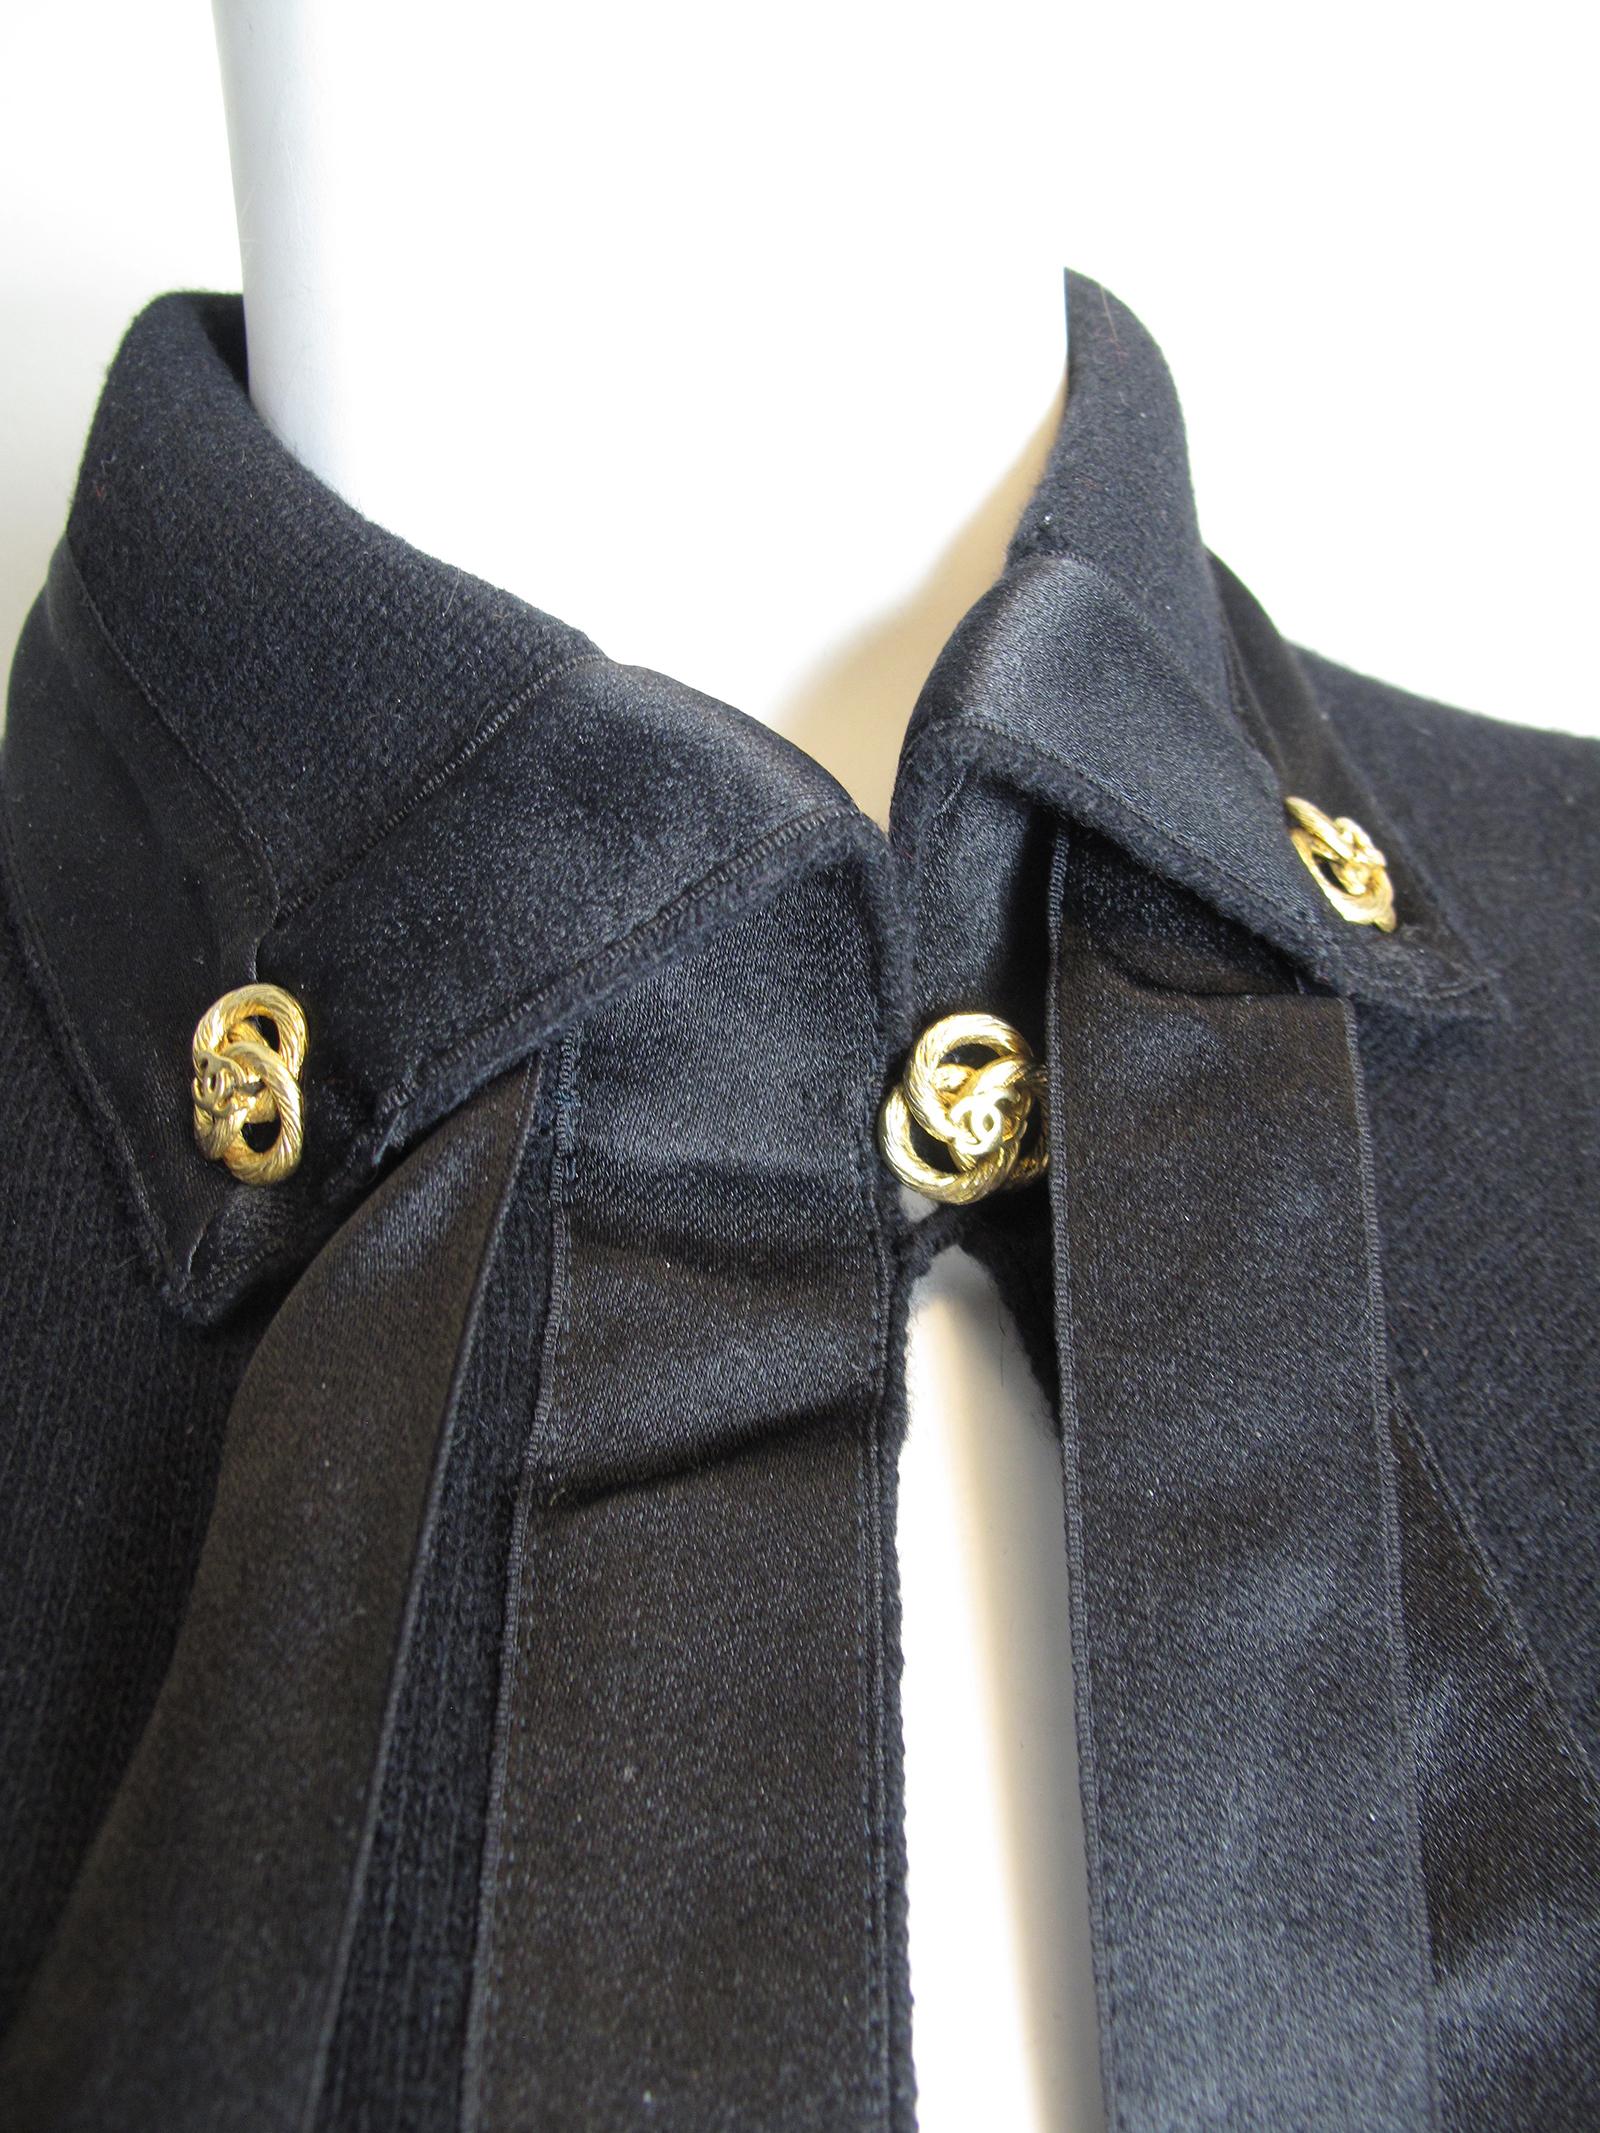 Chanel black cashmere cardigan with satin trim and necktie.  